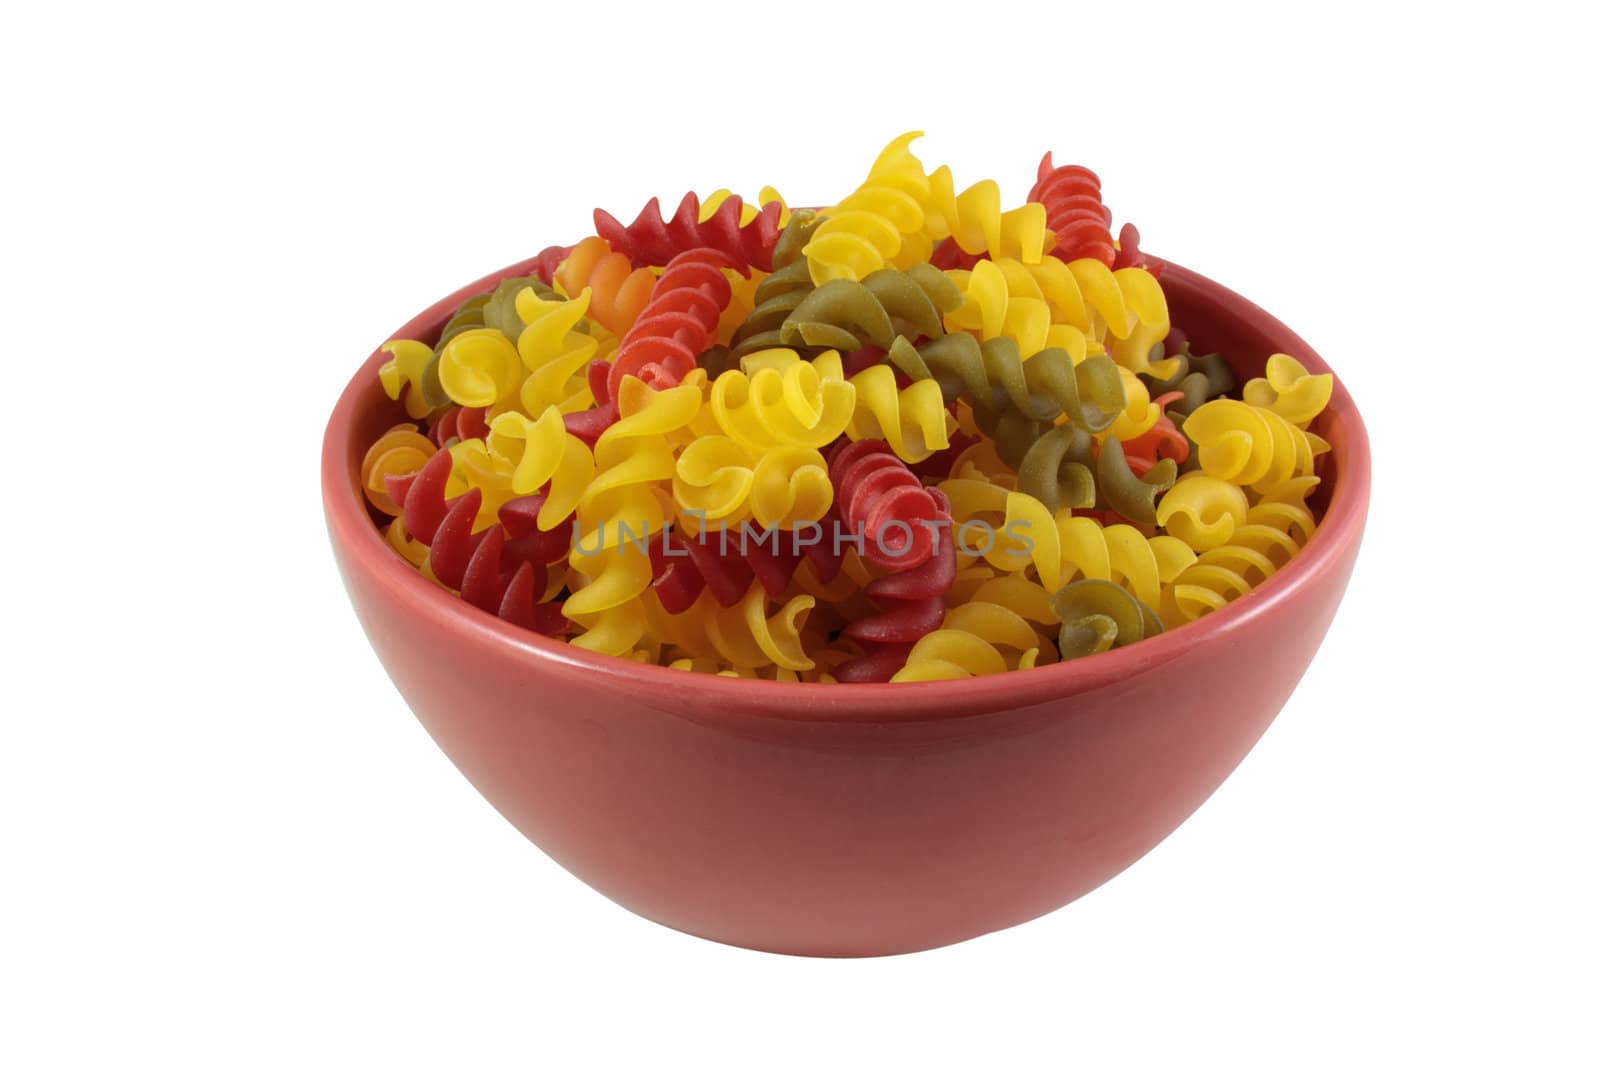 A bowl of tri-coloured pasta